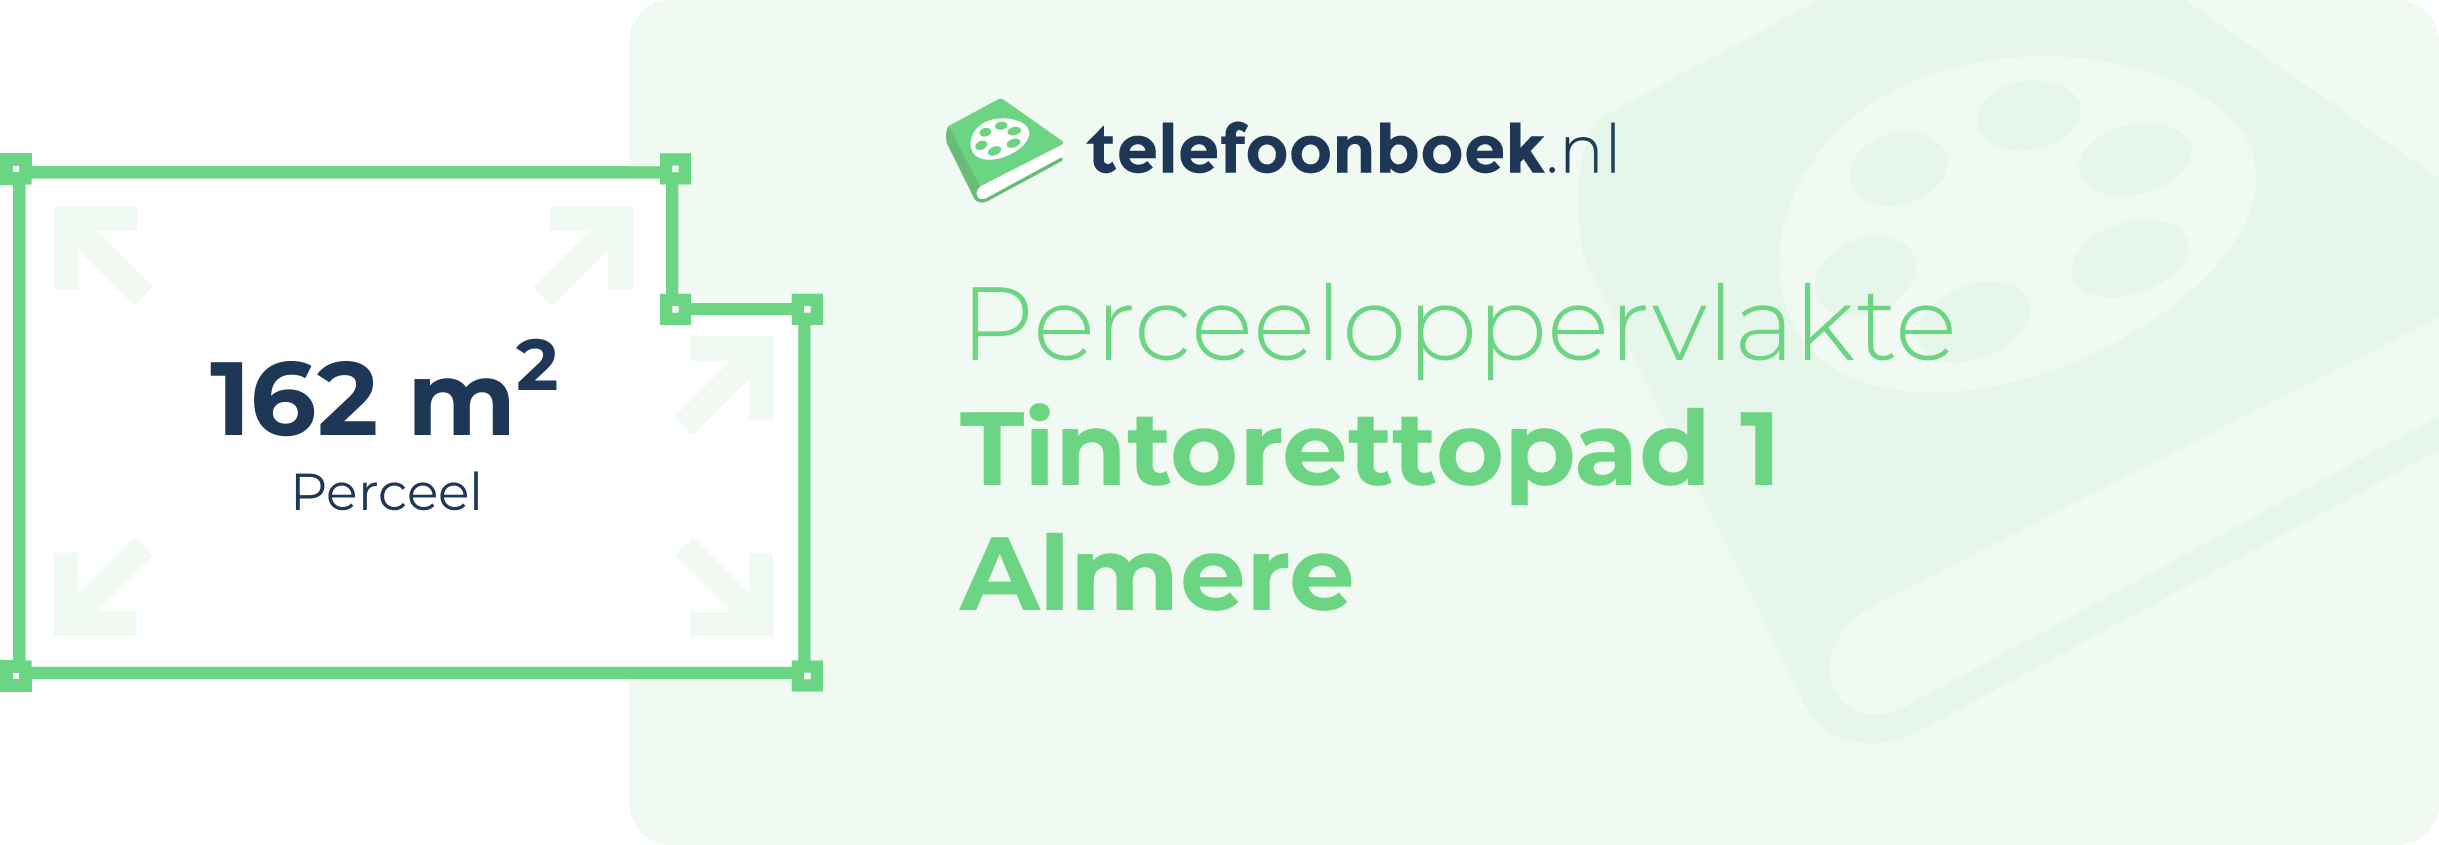 Perceeloppervlakte Tintorettopad 1 Almere